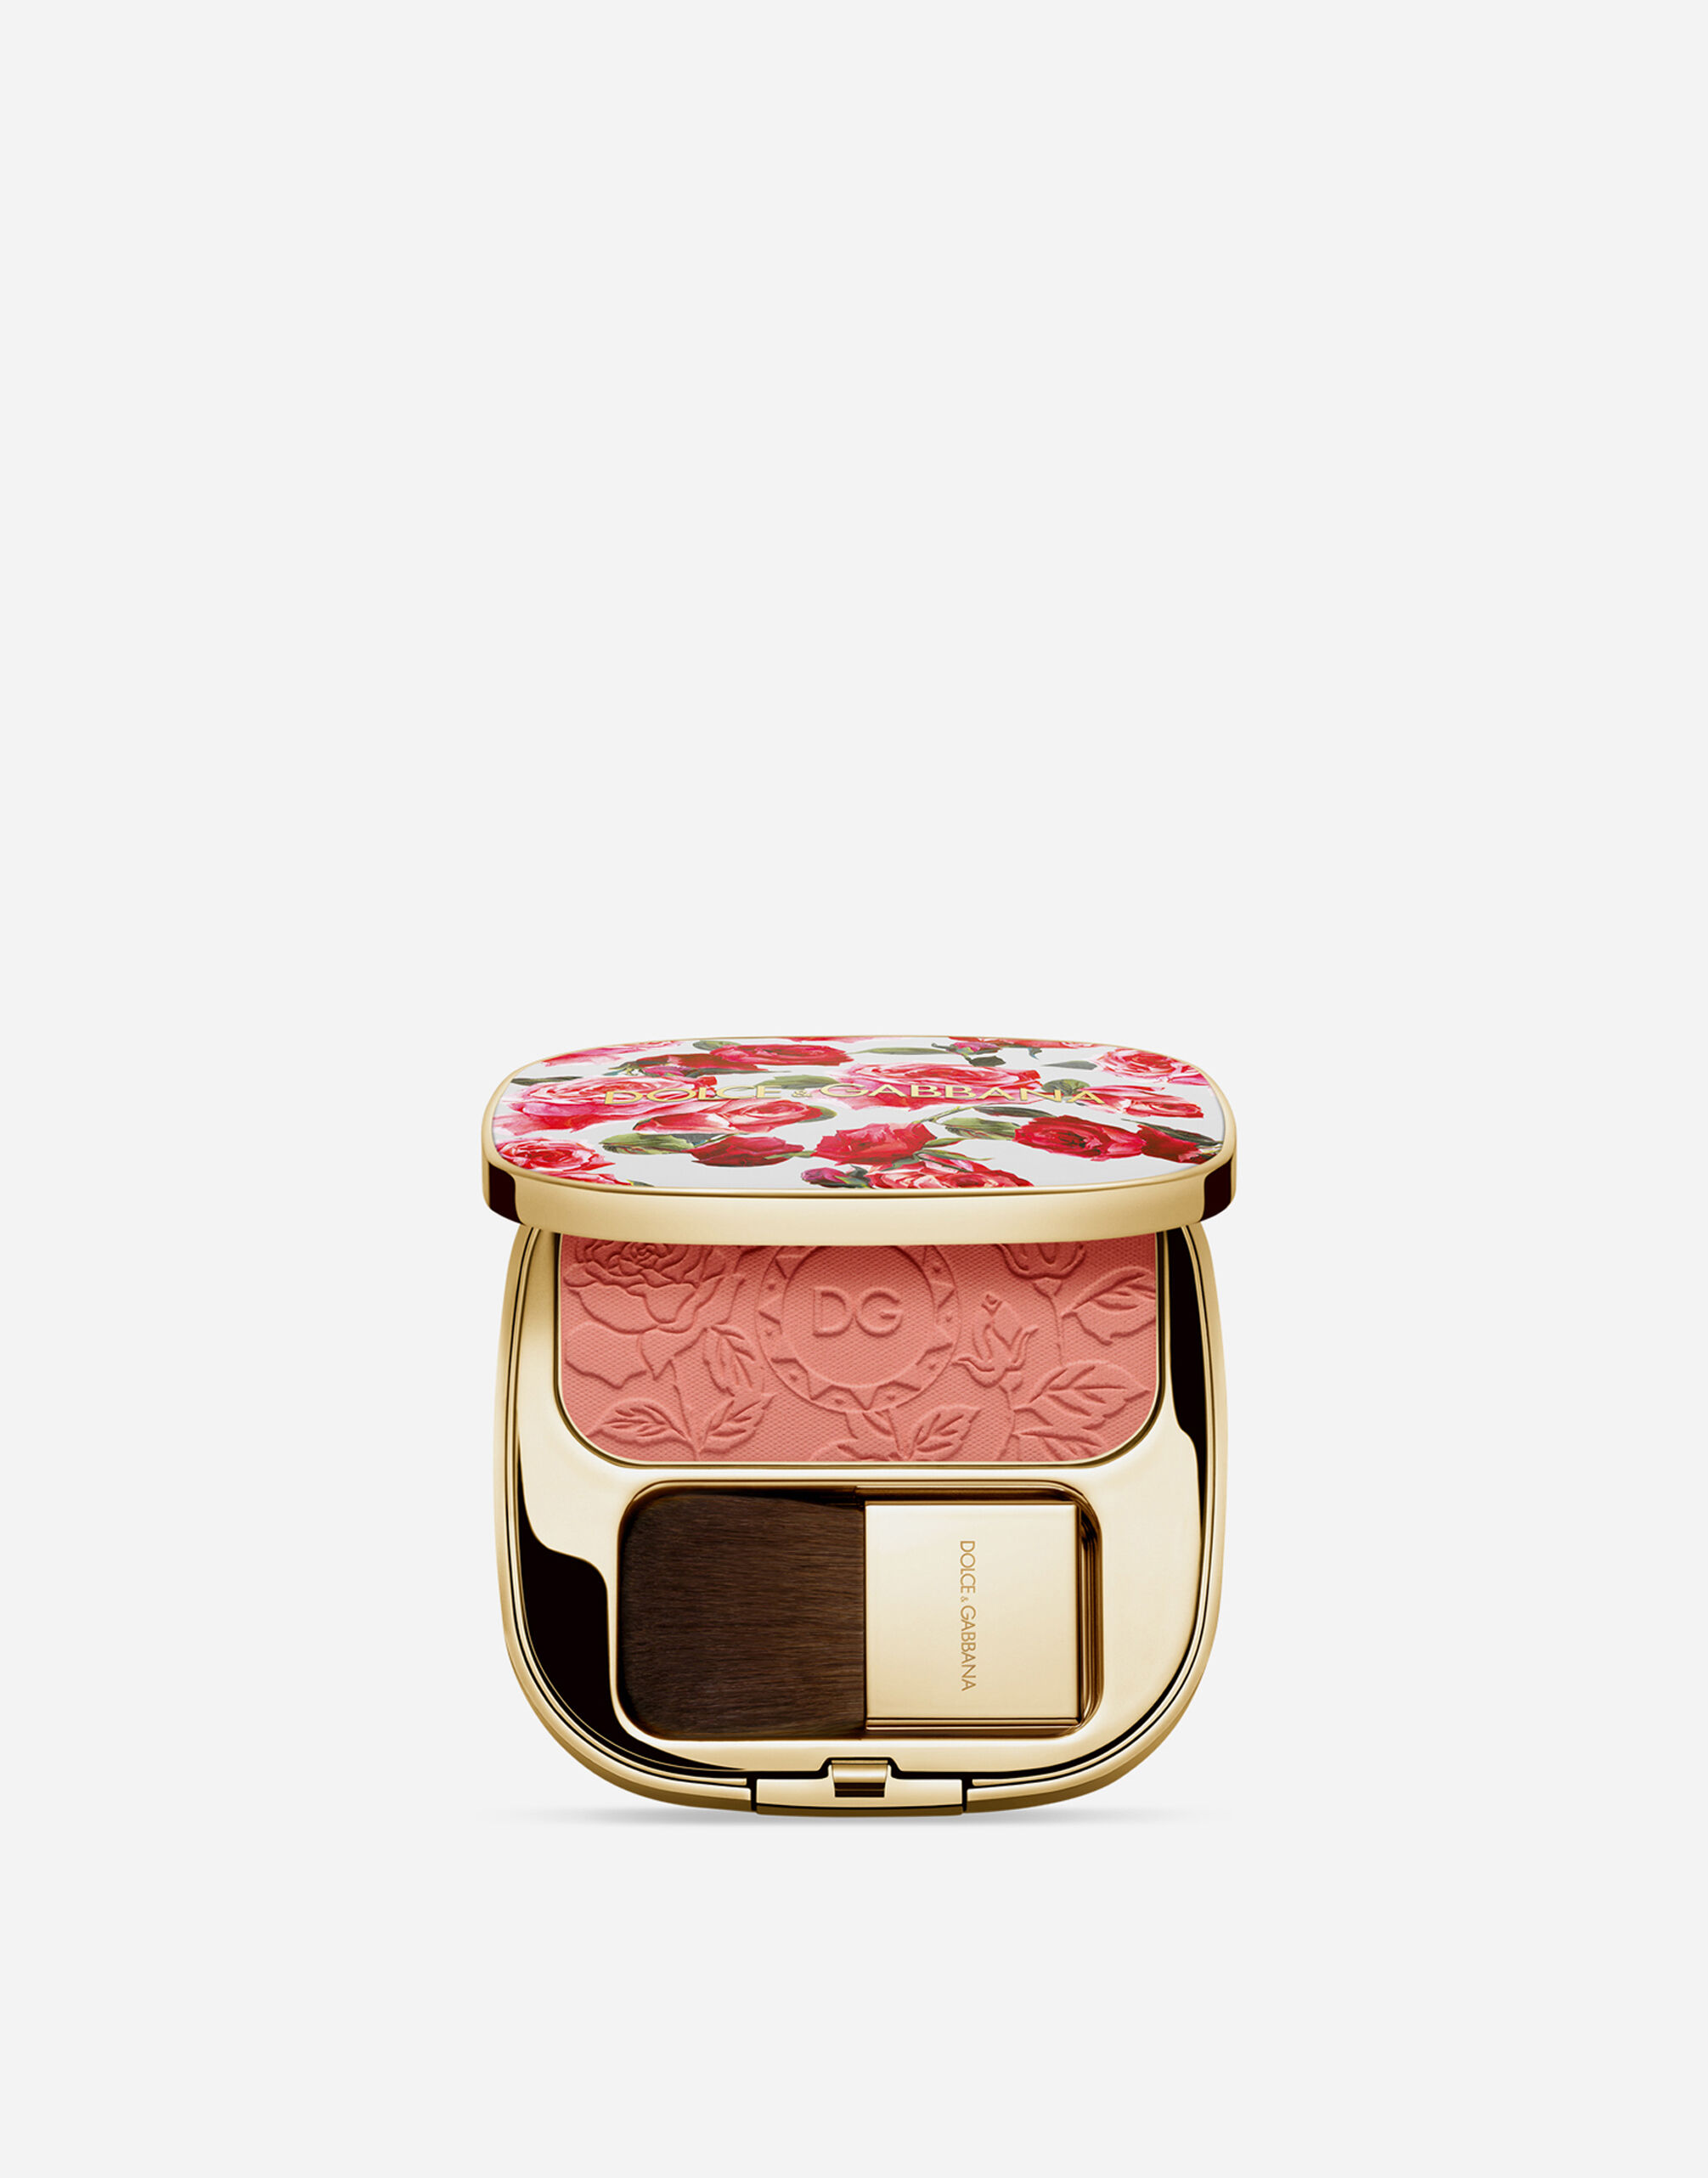 Румяна Dolce & Gabbana Blush Of Roses с эффектом сияния, №400 Peach, 5 г